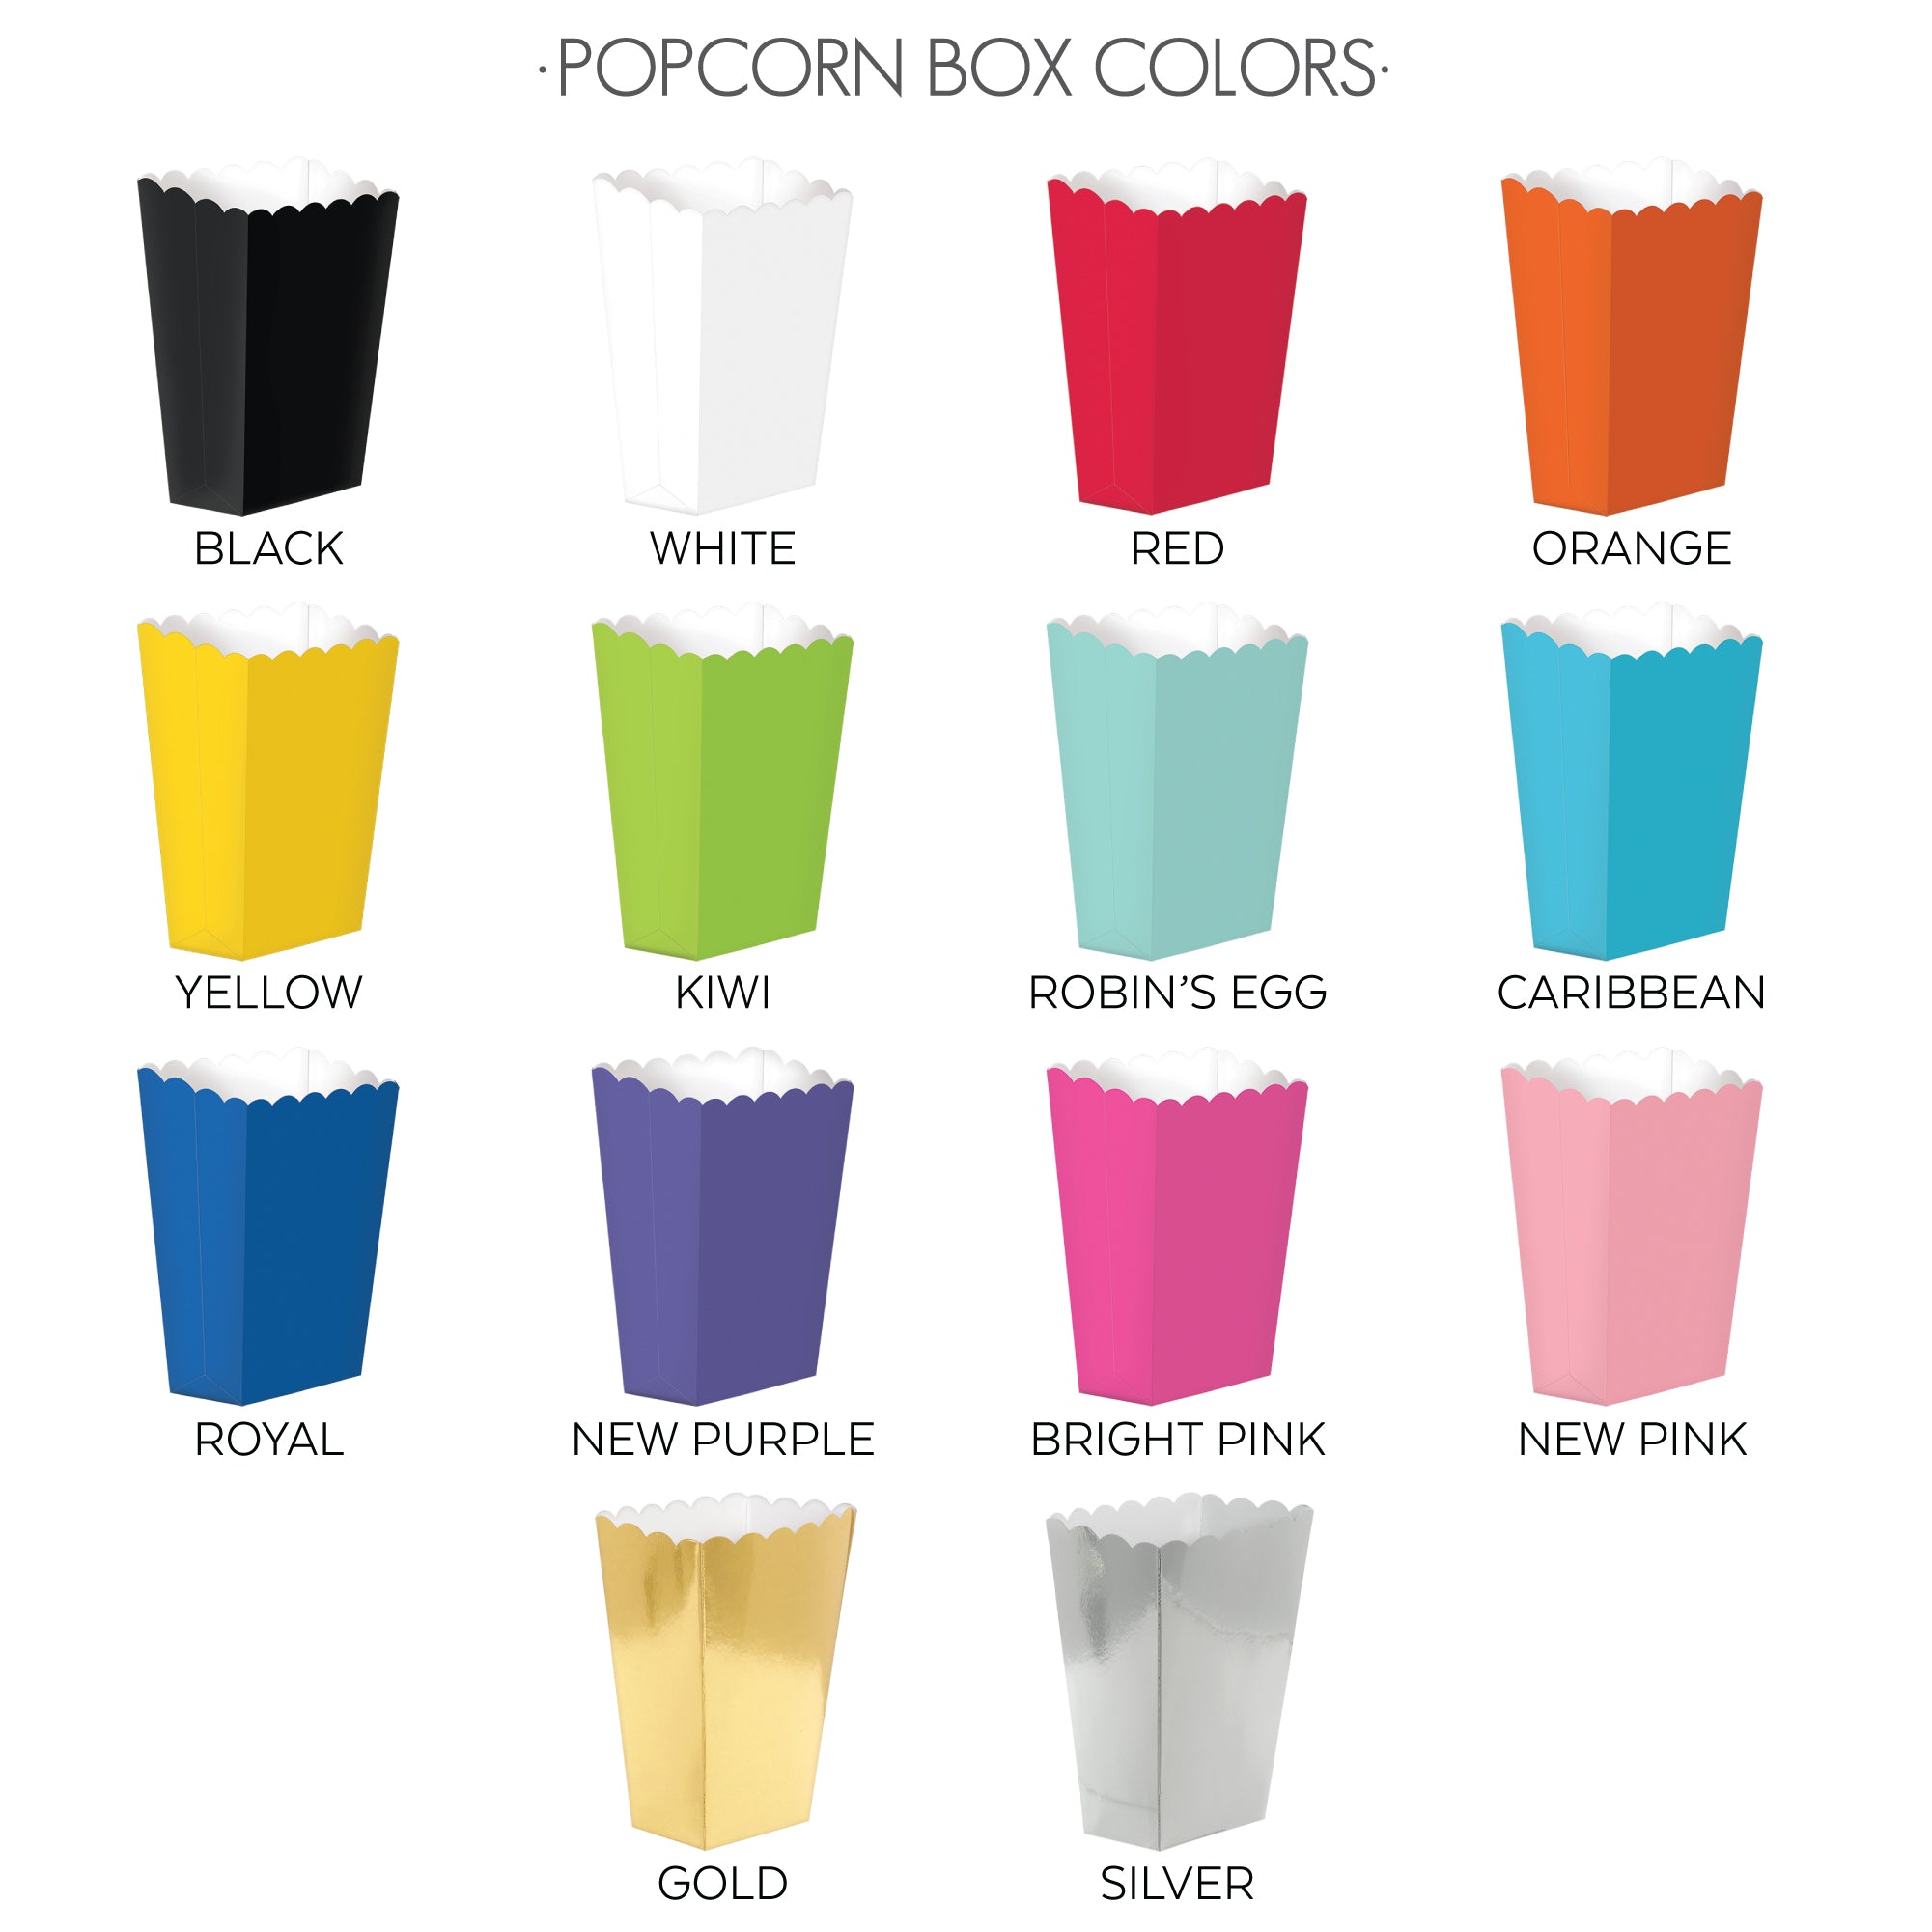 popcorn box colors